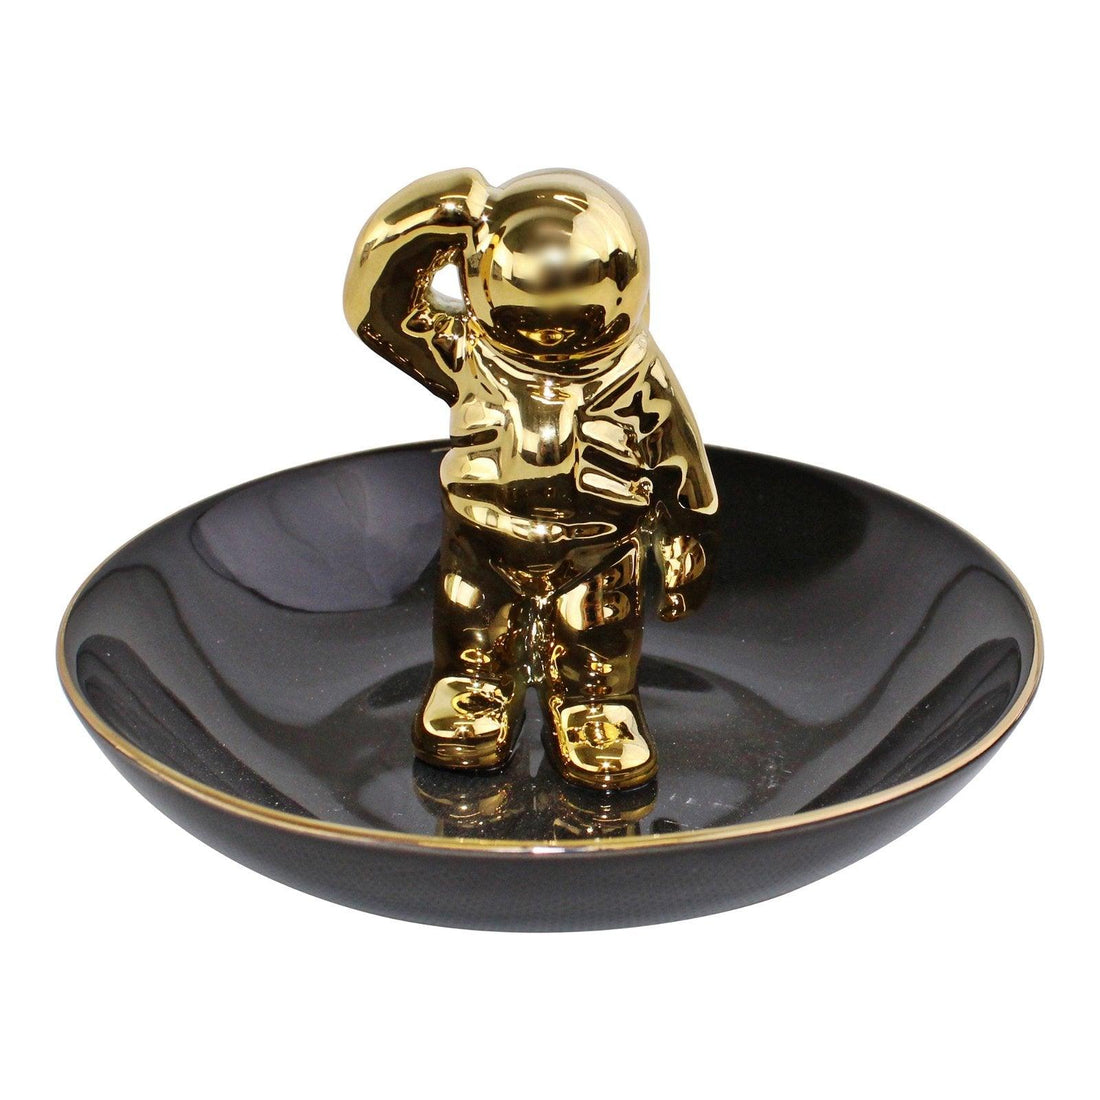 Black & Gold Ceramic Spaceman Trinket Dish - £16.99 - Ornaments 